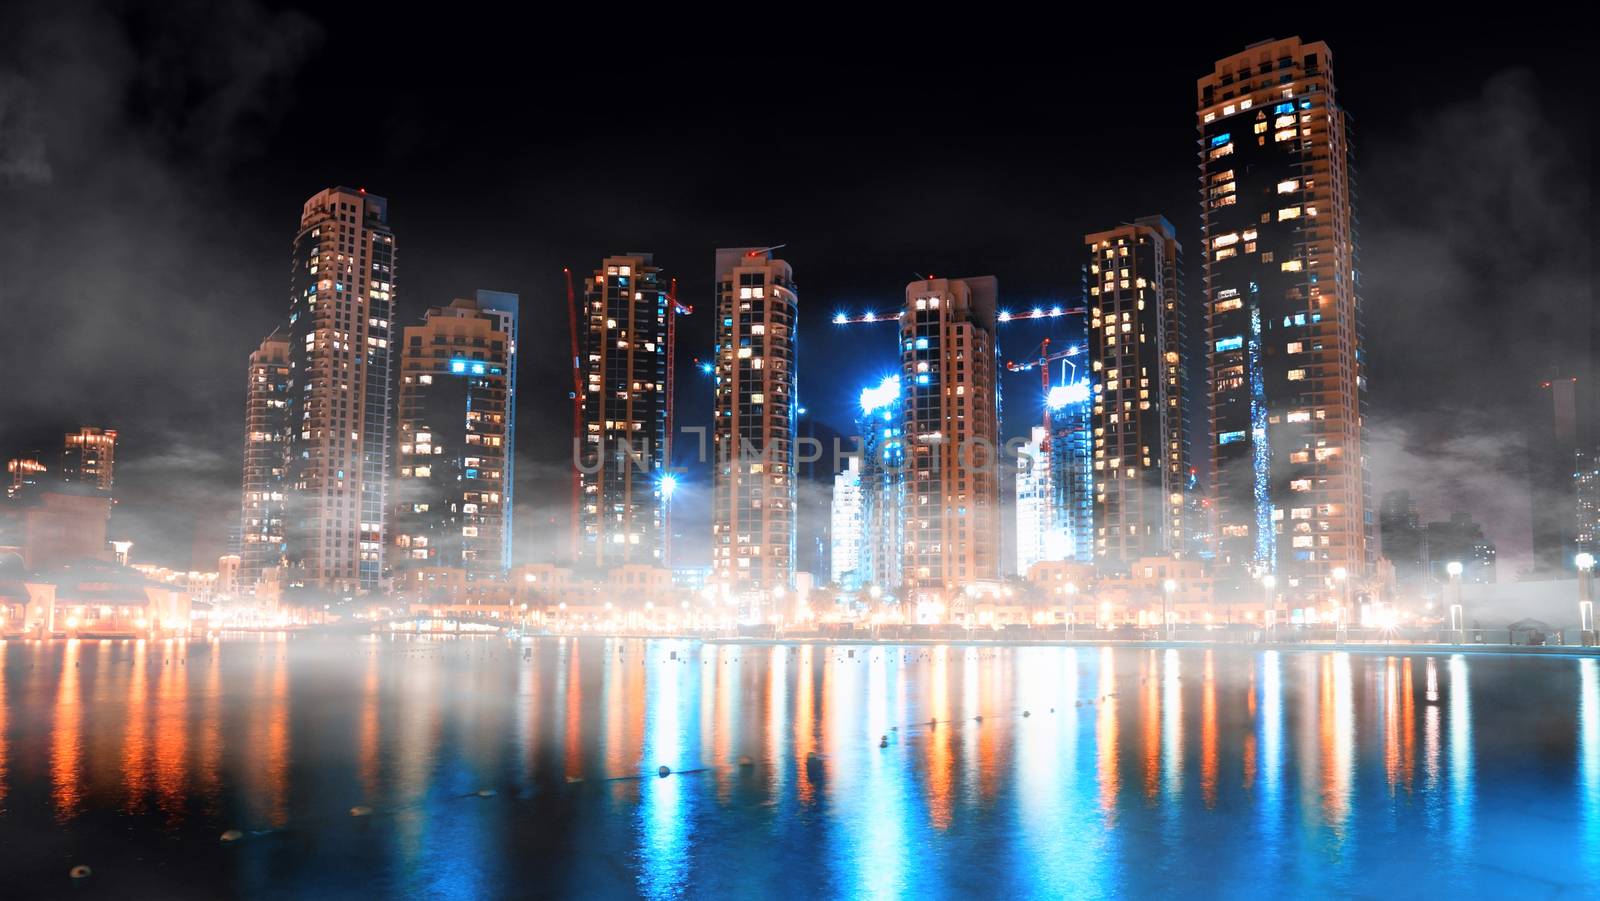 Dubai downtown night scene by GekaSkr